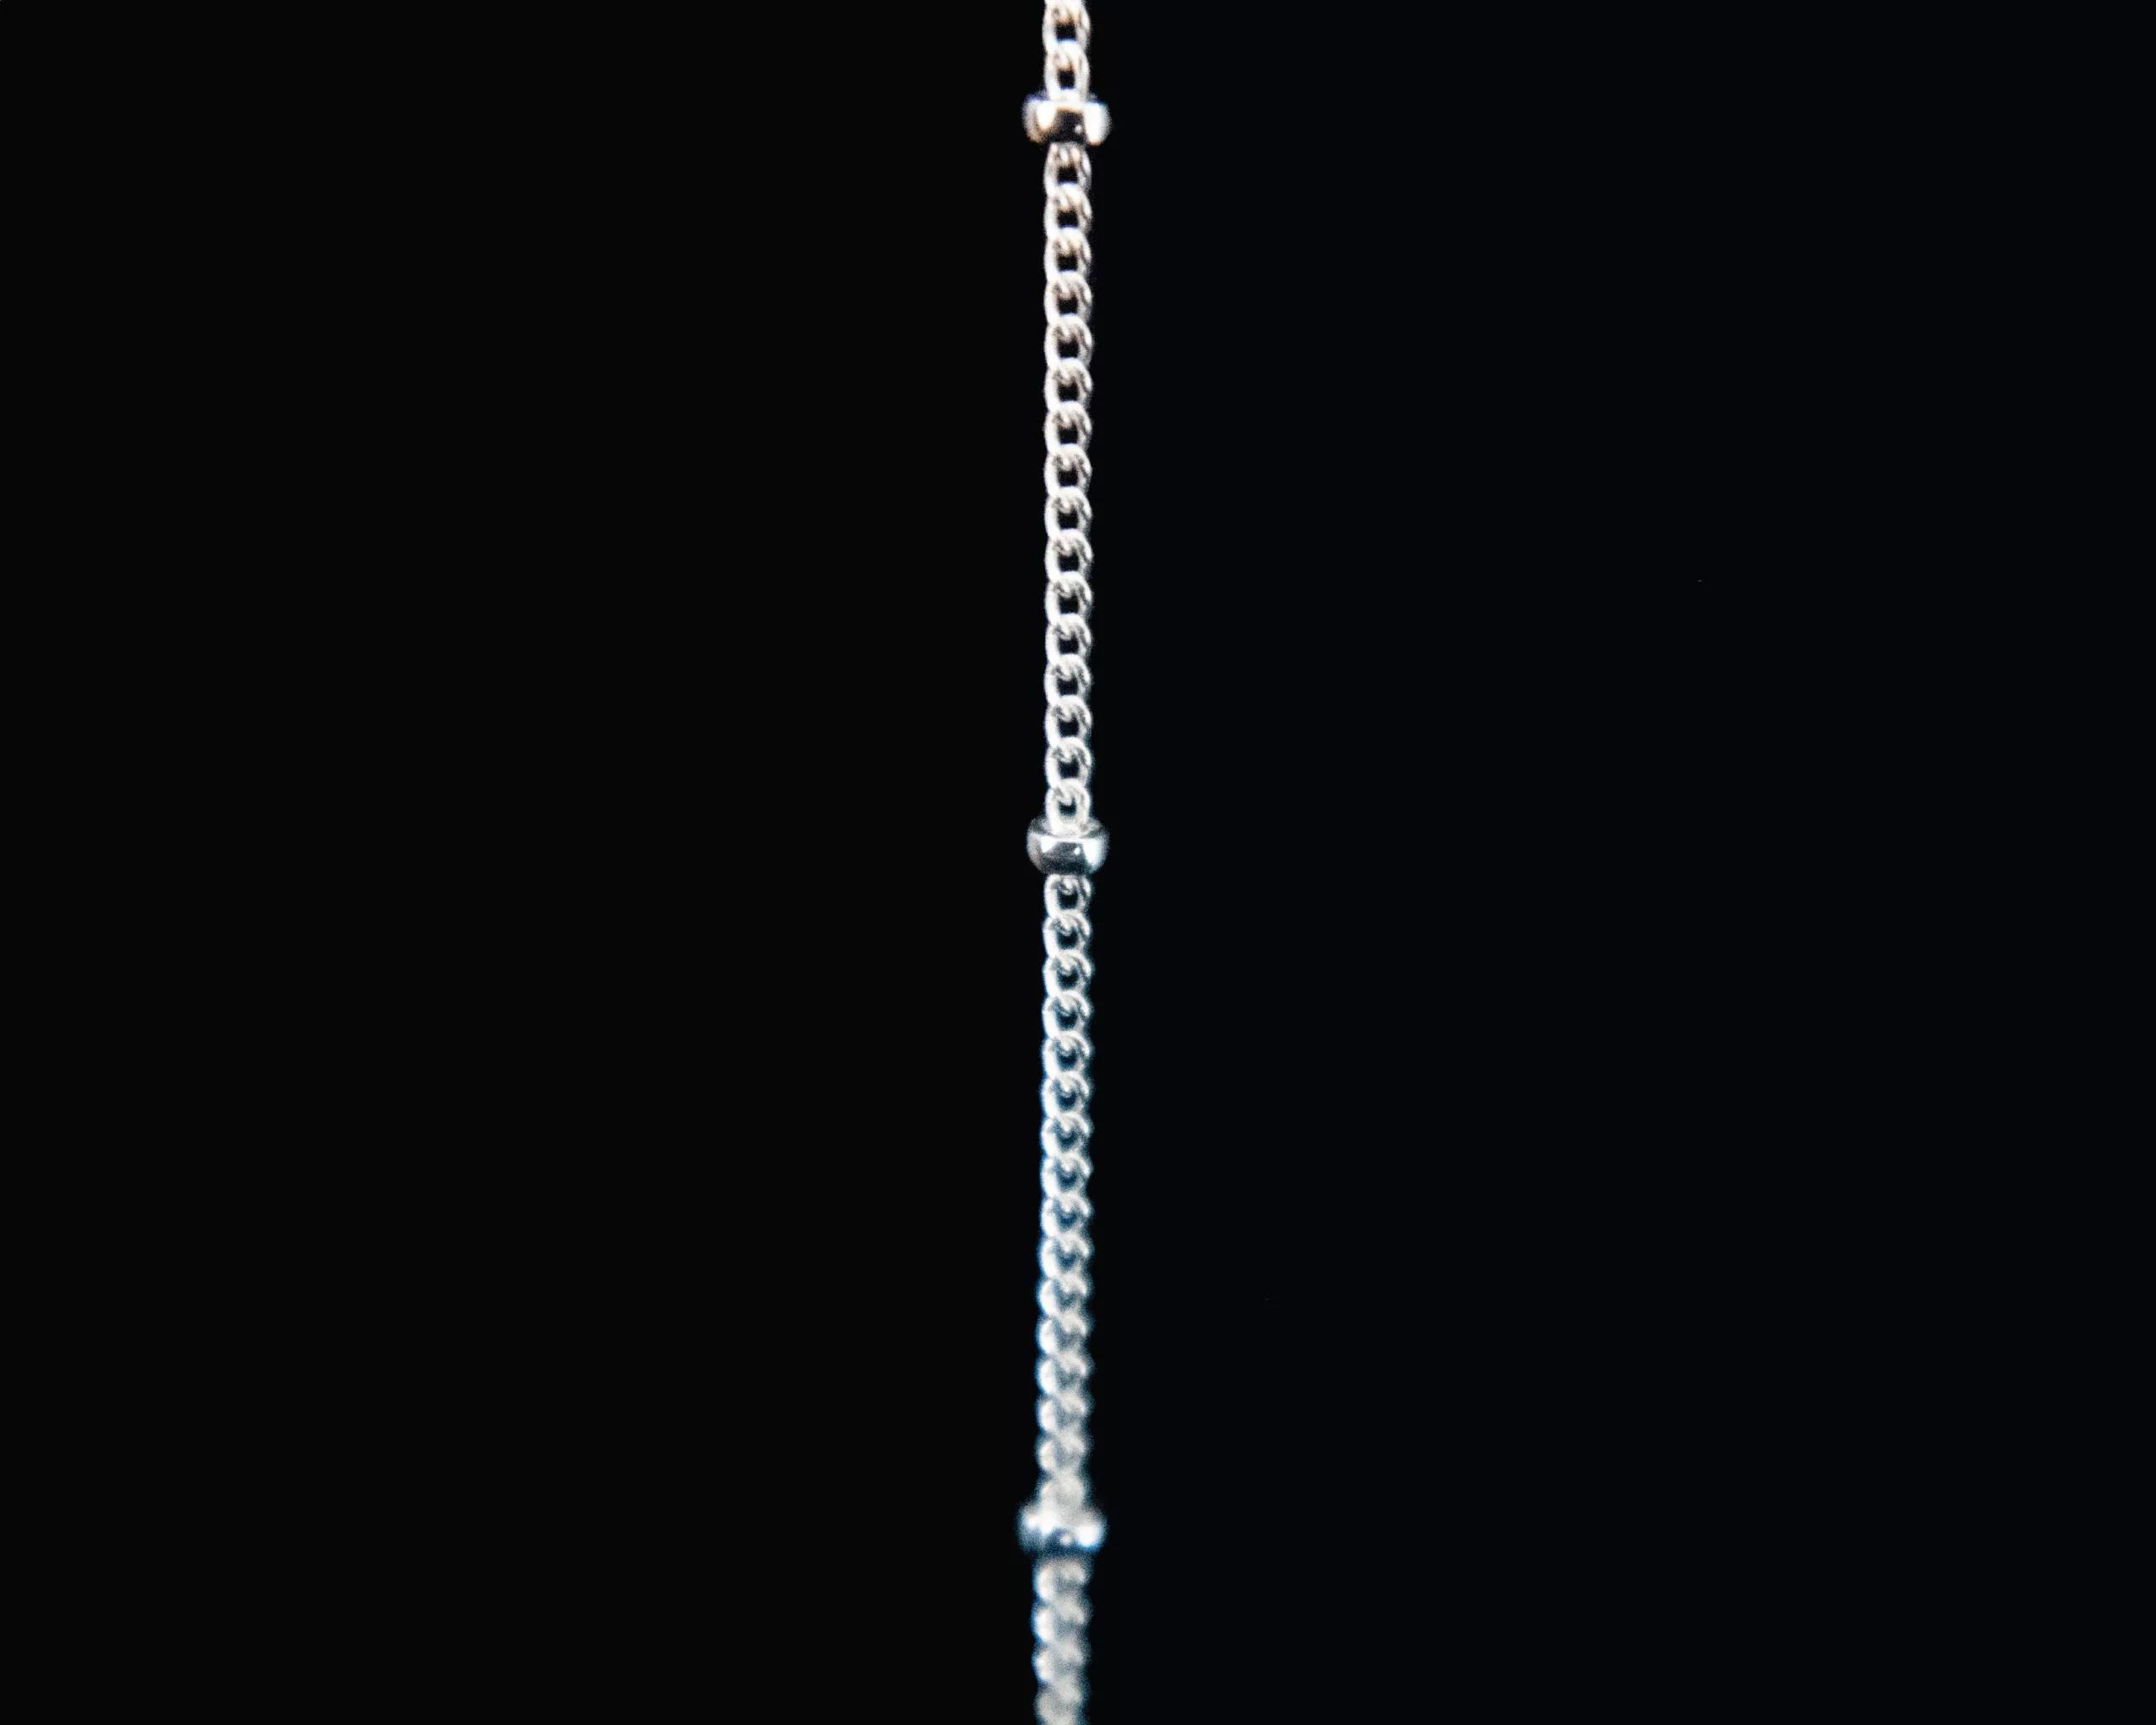 Permanent jewelry chain